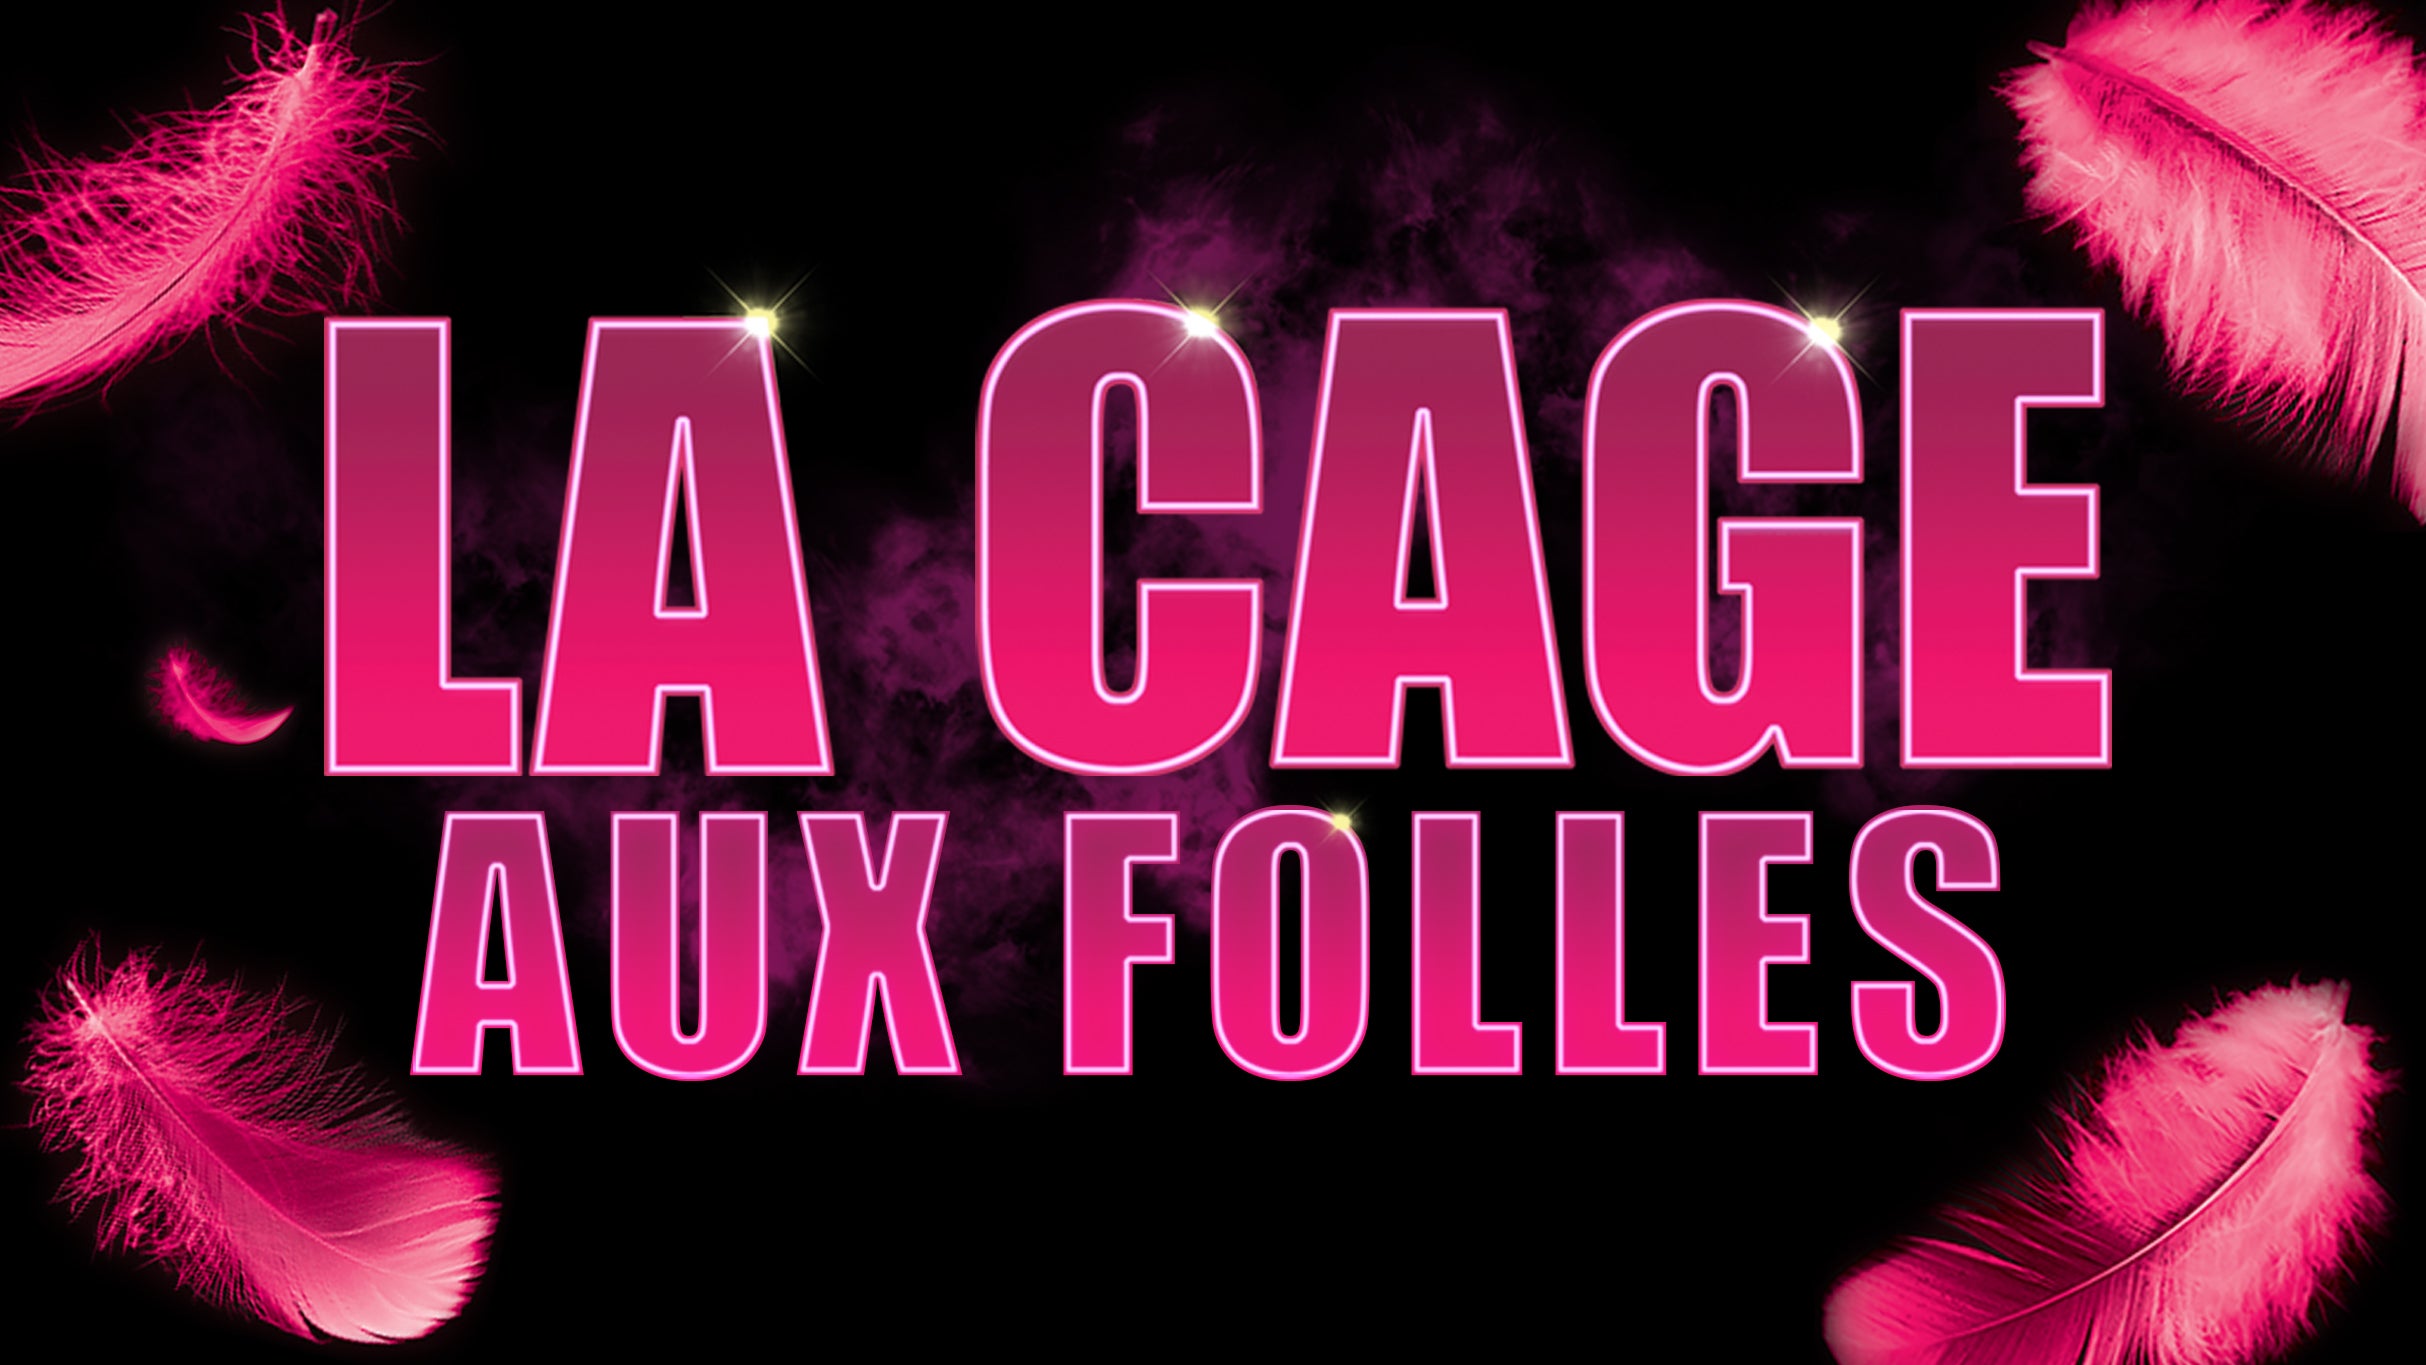 La Cage Aux Folles in Sydney promo photo for Exclusive presale offer code